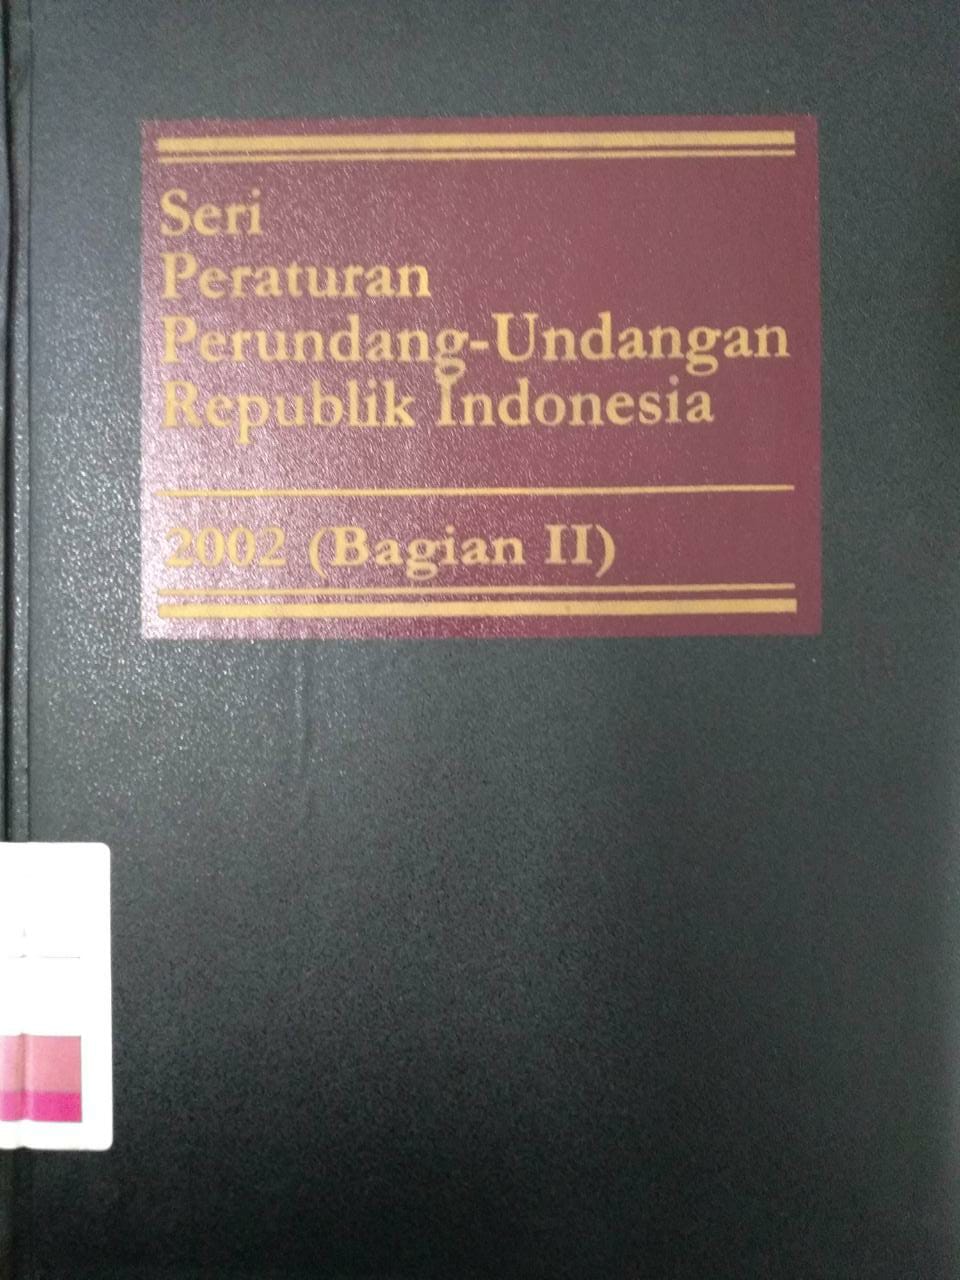 Seri Peraturan Perundang-undangan Republik Indonesia 2003 (Bagian I)